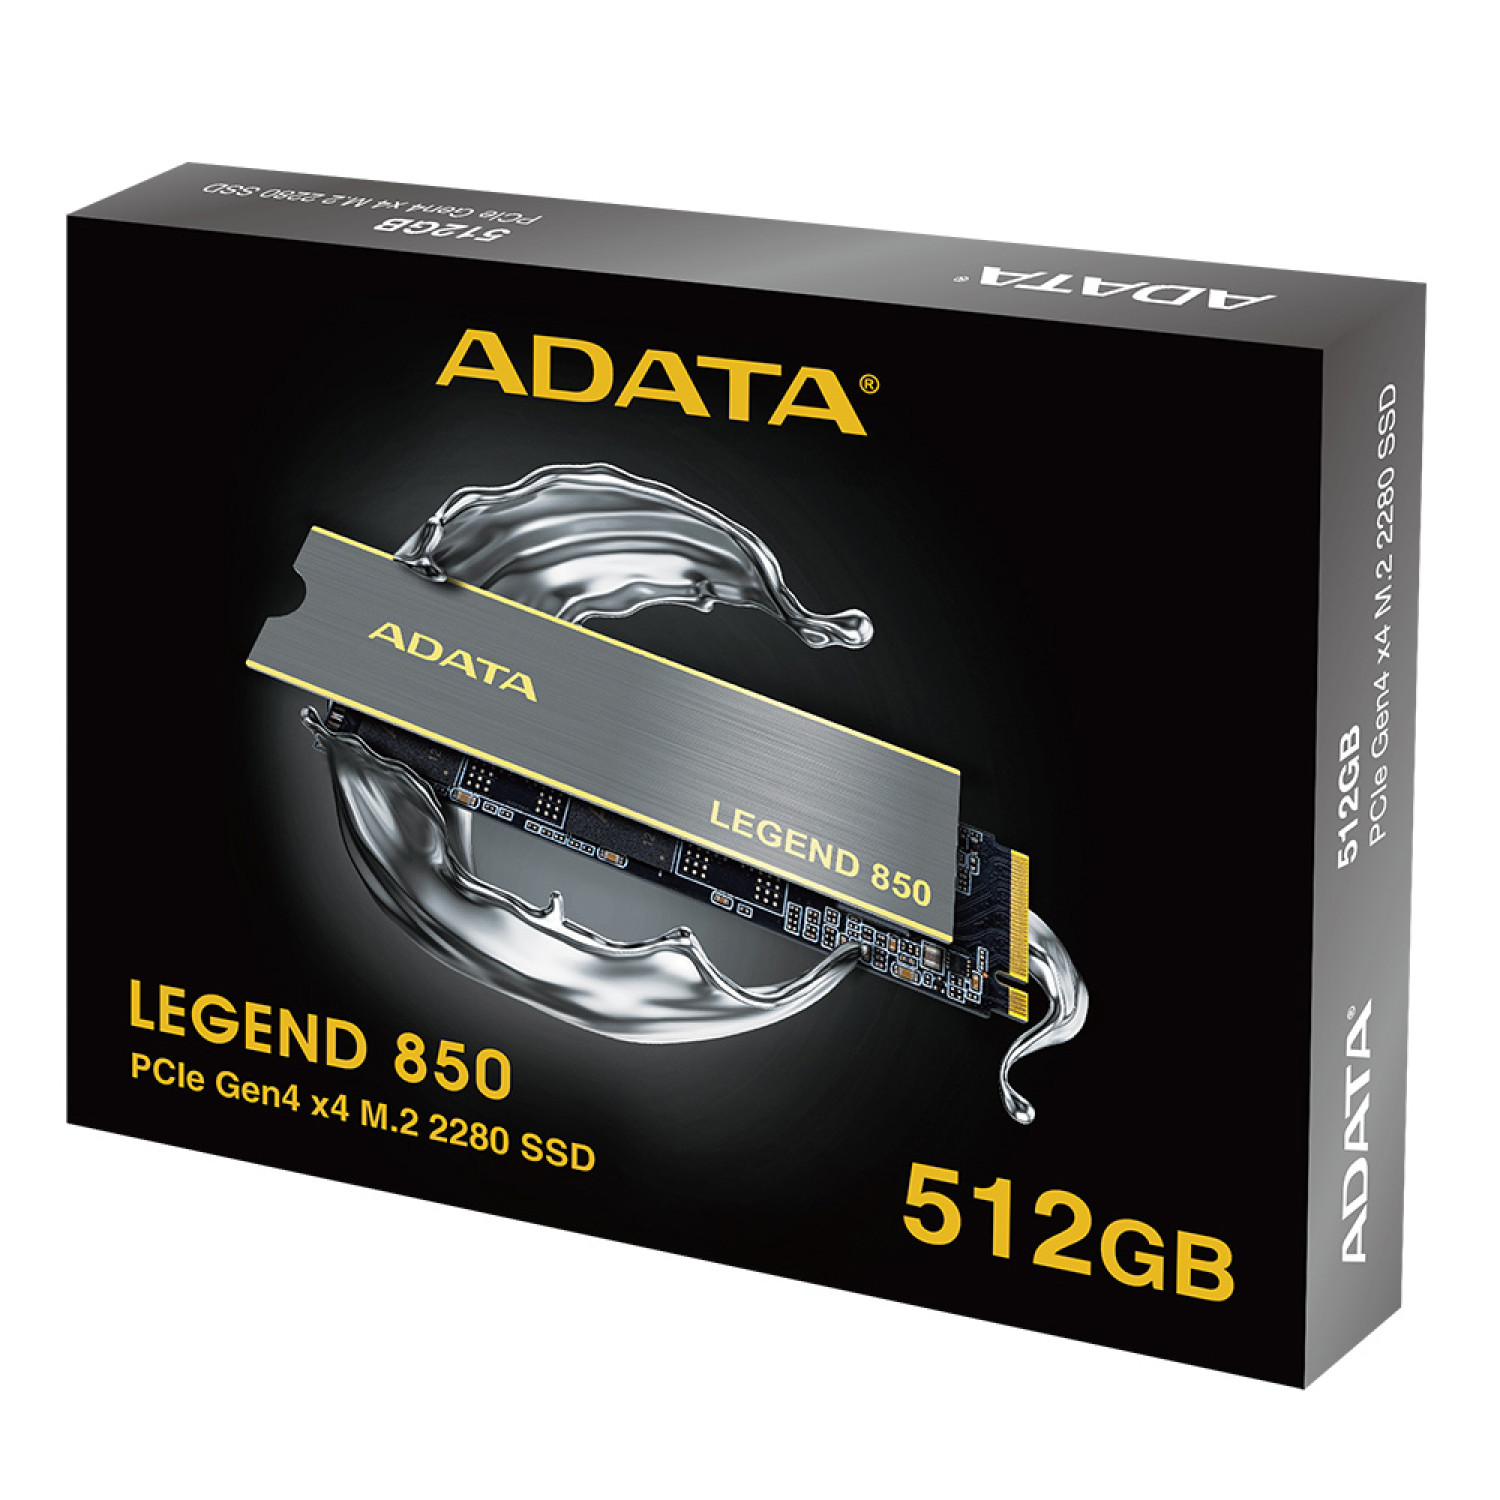 حافظه اس اس دی ADATA Legend 850 512GB - for PS5-6